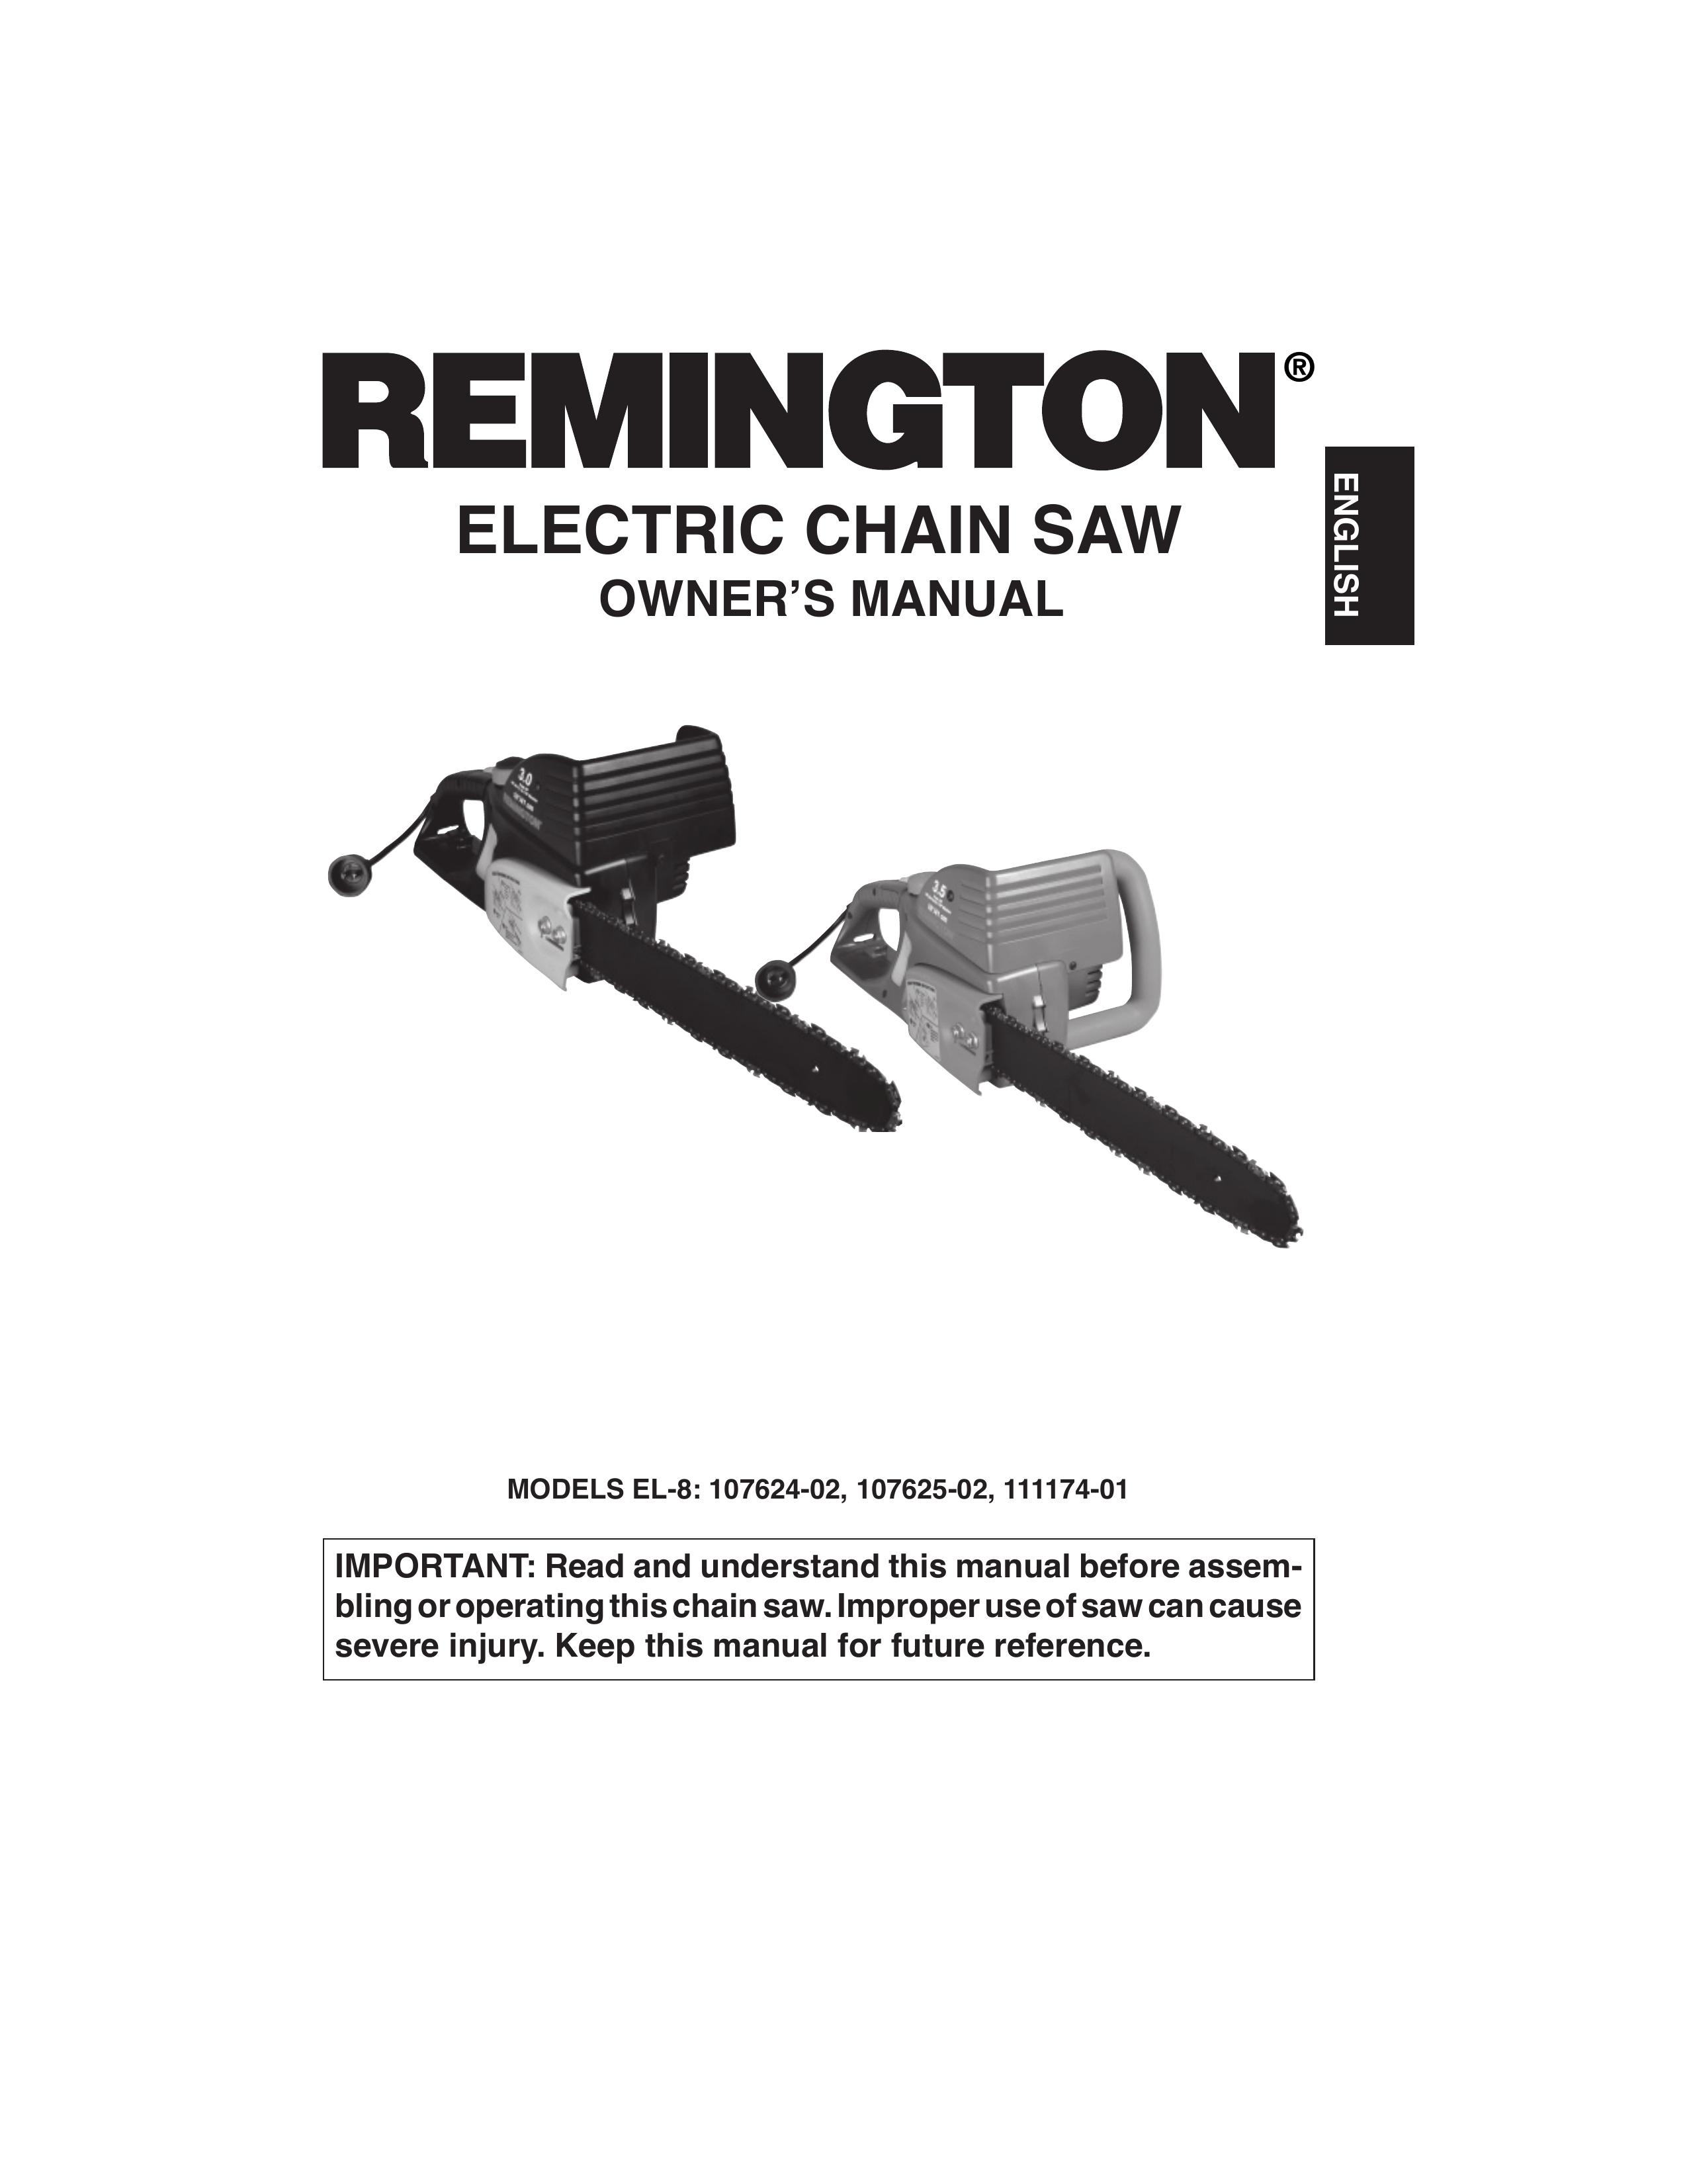 Remington Power Tools 107625-02 Chainsaw User Manual